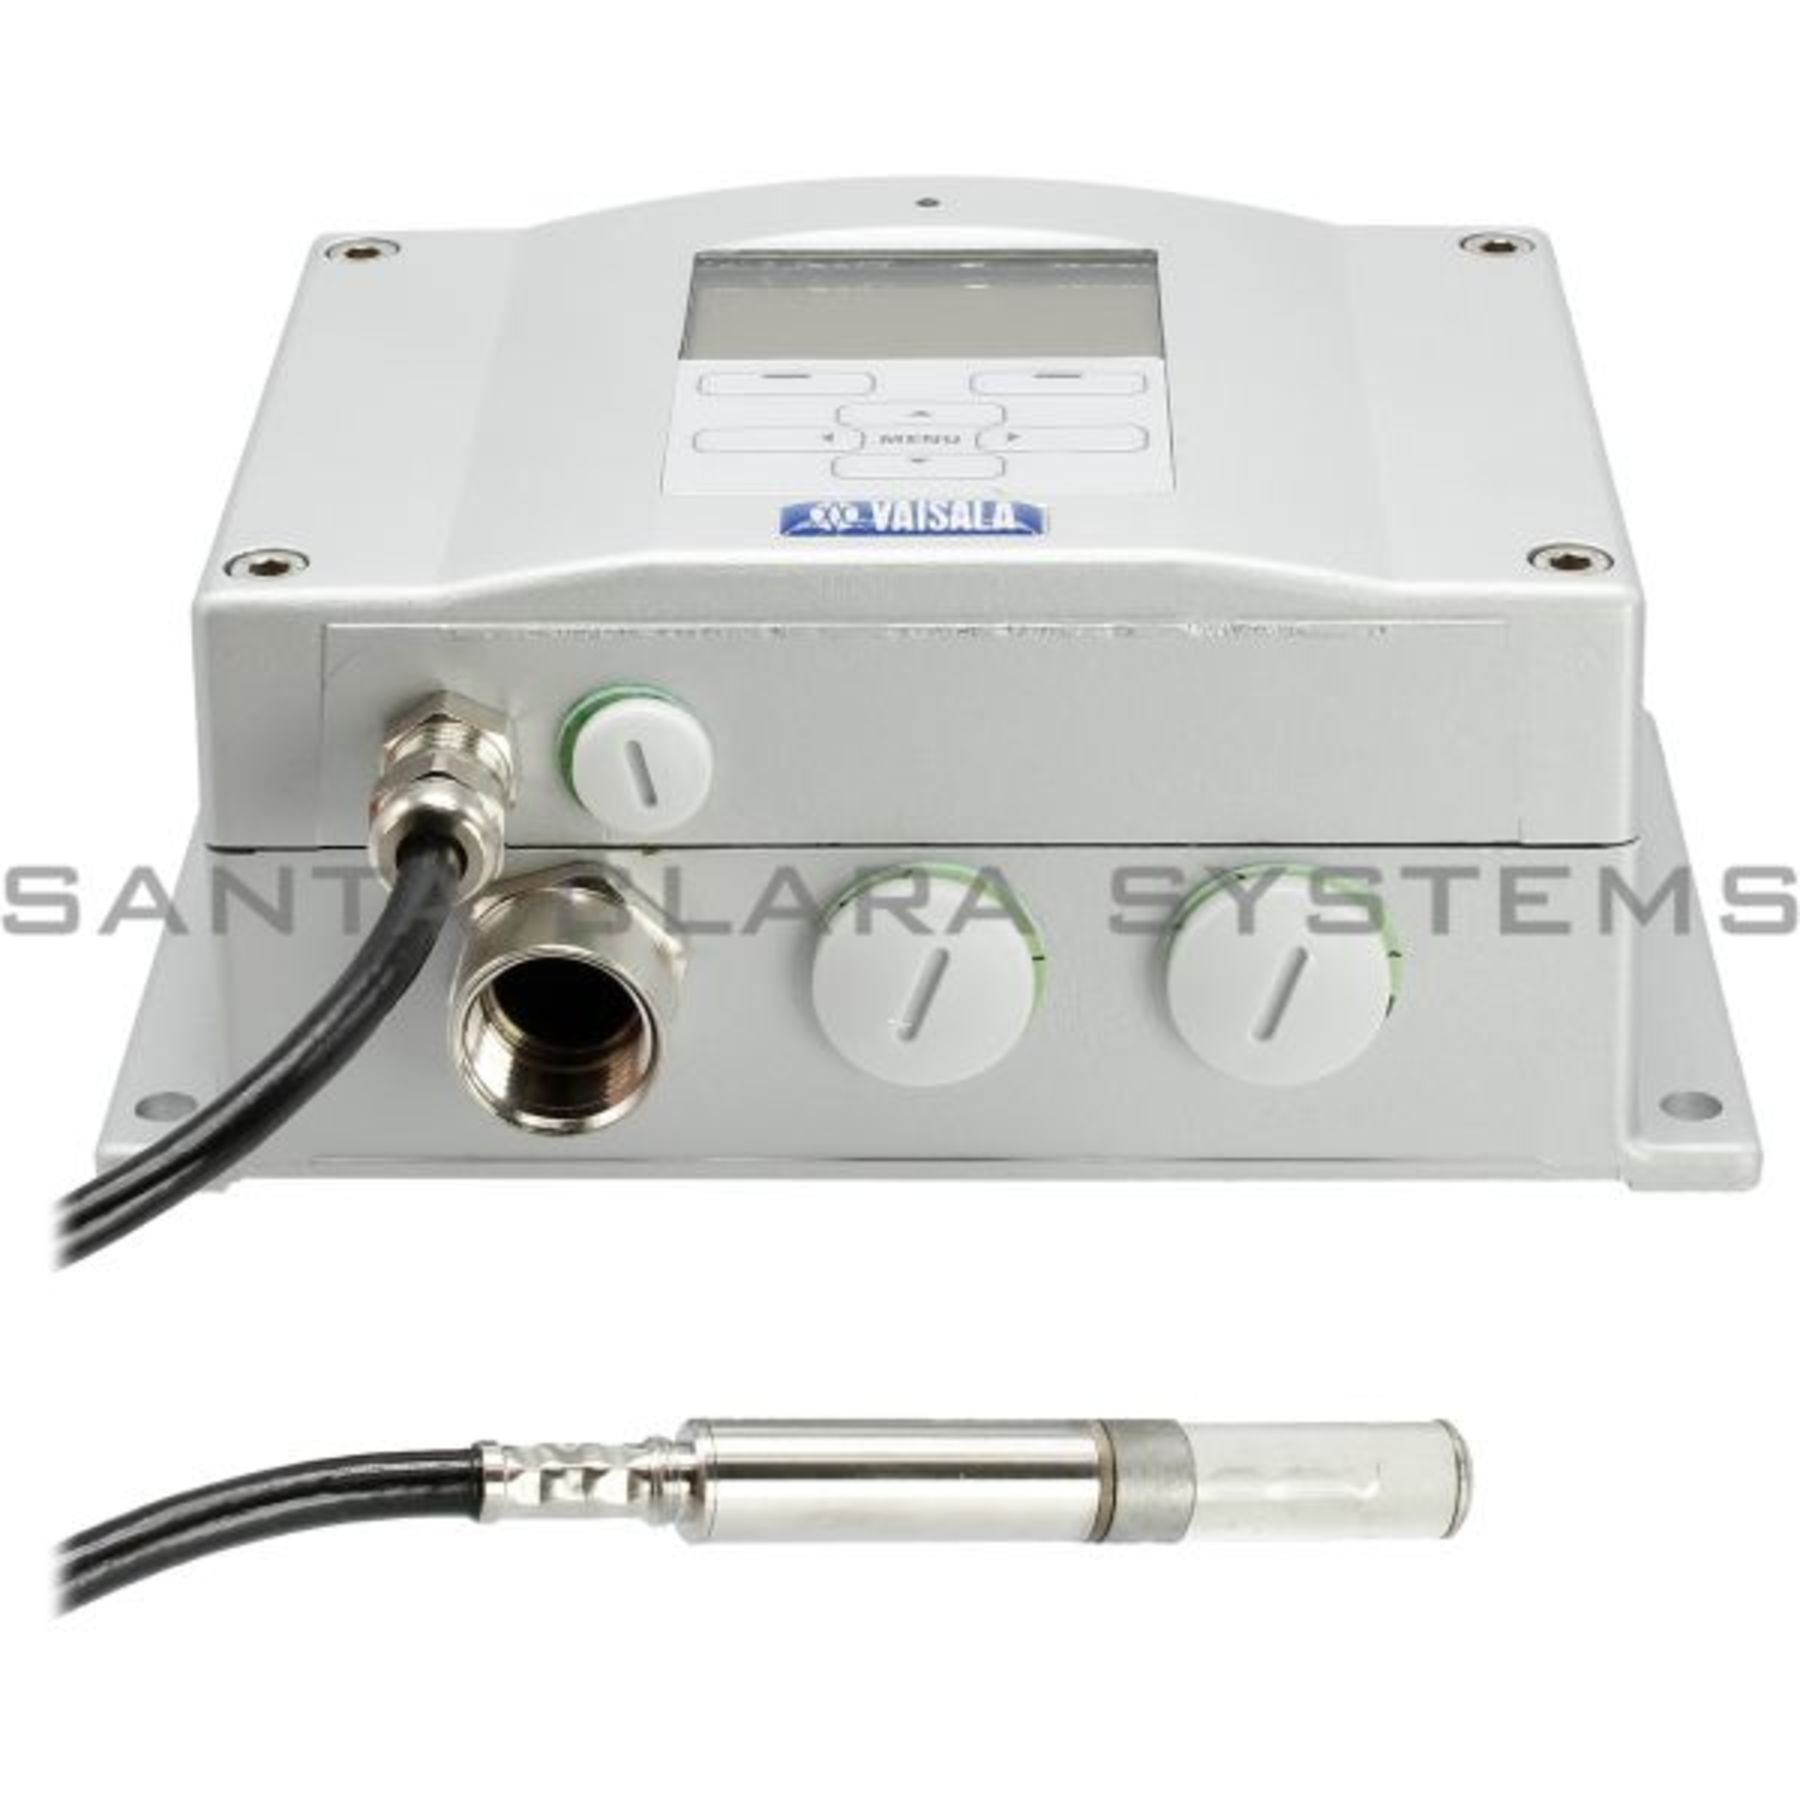 AO-330-01 Ambient Temperature Humidity & Pressure Sensor (with sunscreen),  outputs 4-20mA, 0-10Vdc, RS485, SDI-12 - Maranata-Madrid SL - NIF B-85746204